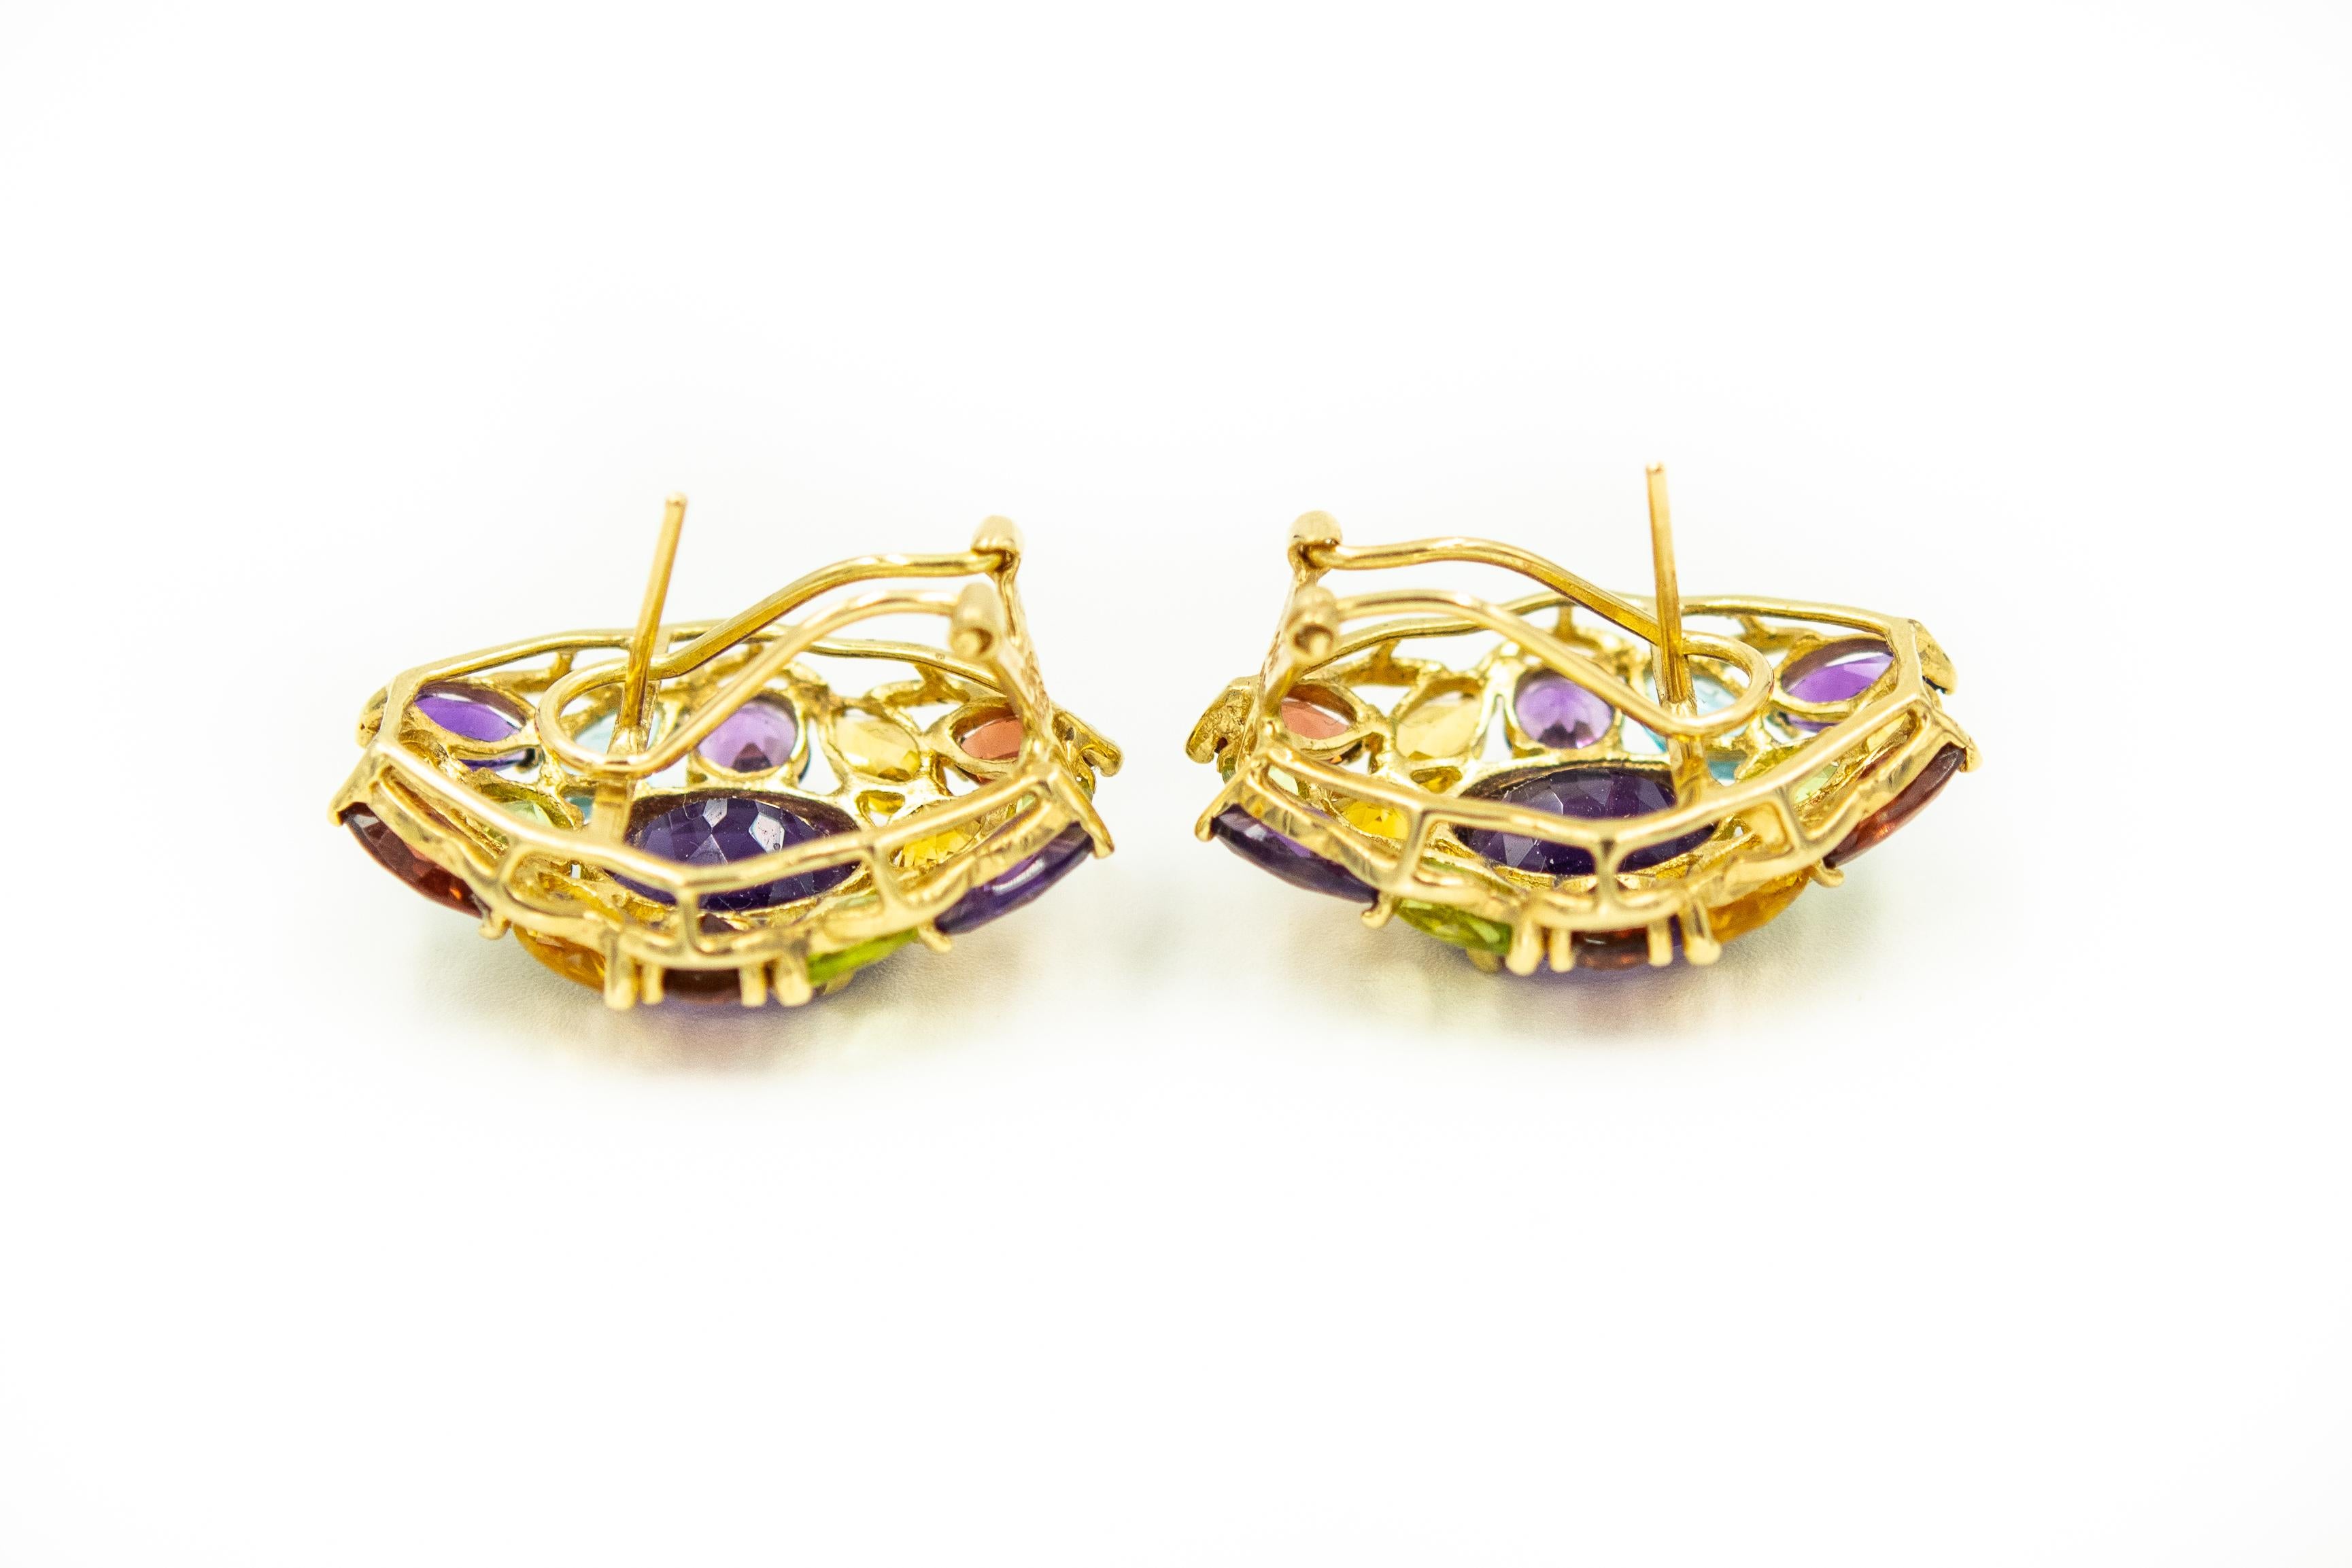 Mixed Cut 1970s Semi Precious Gemstone Gold Flower Bracelet Earrings Ring and Pendant Set